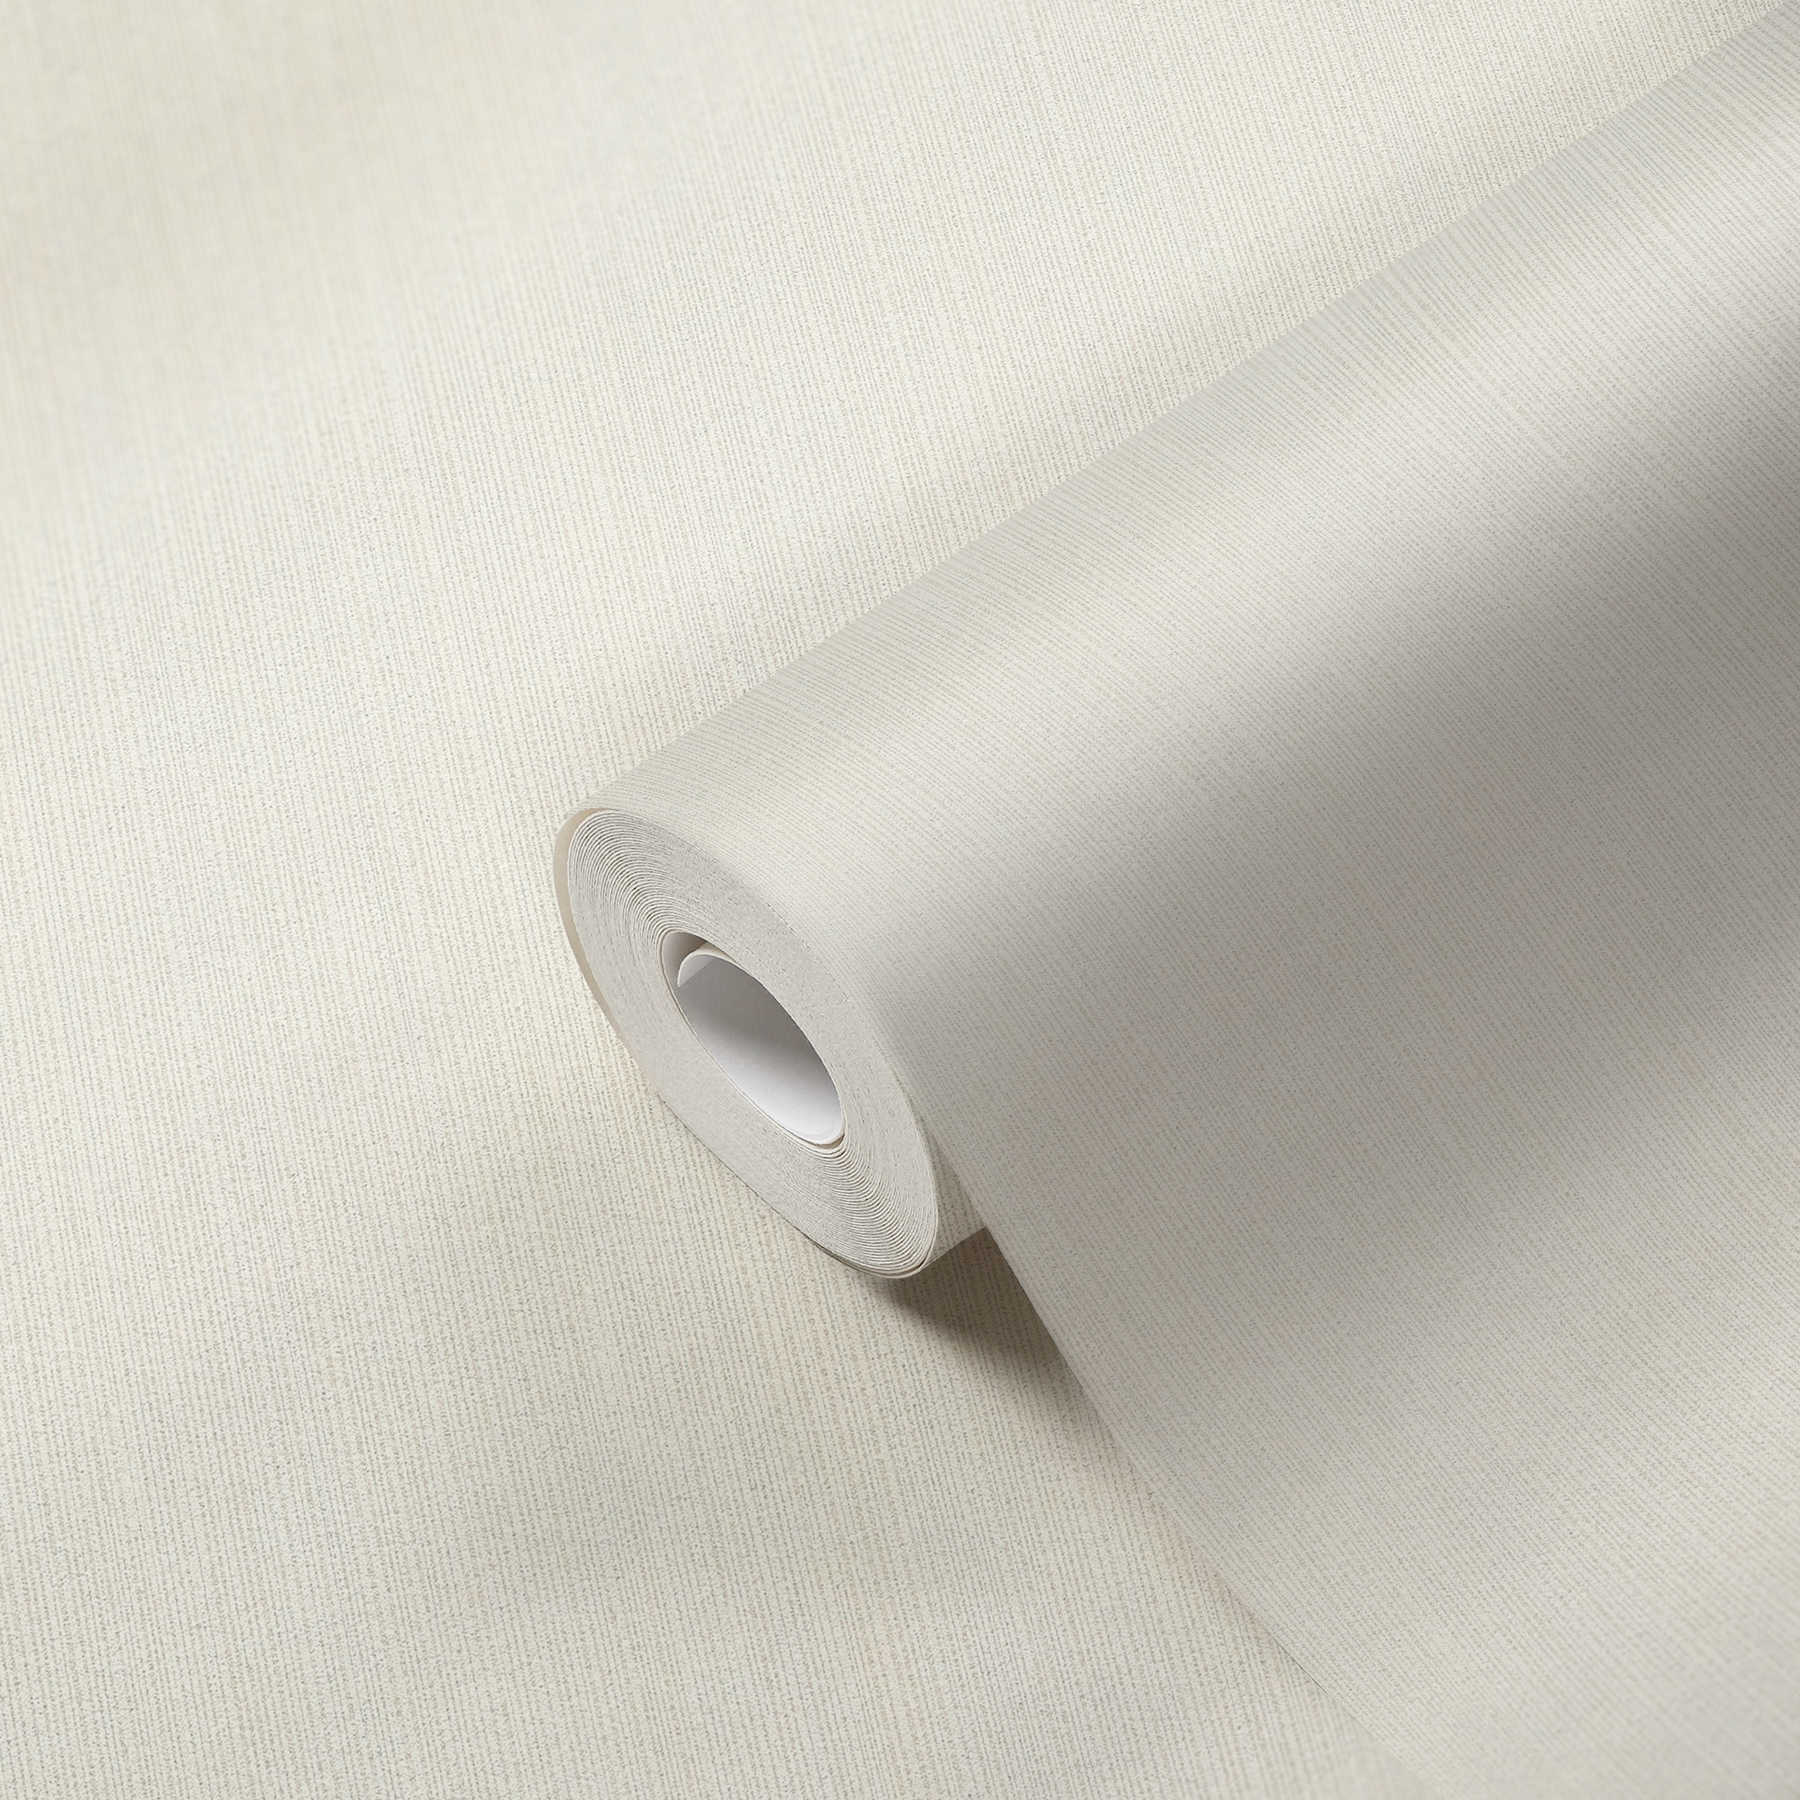             Modern non-woven wallpaper plain white with texture effect
        